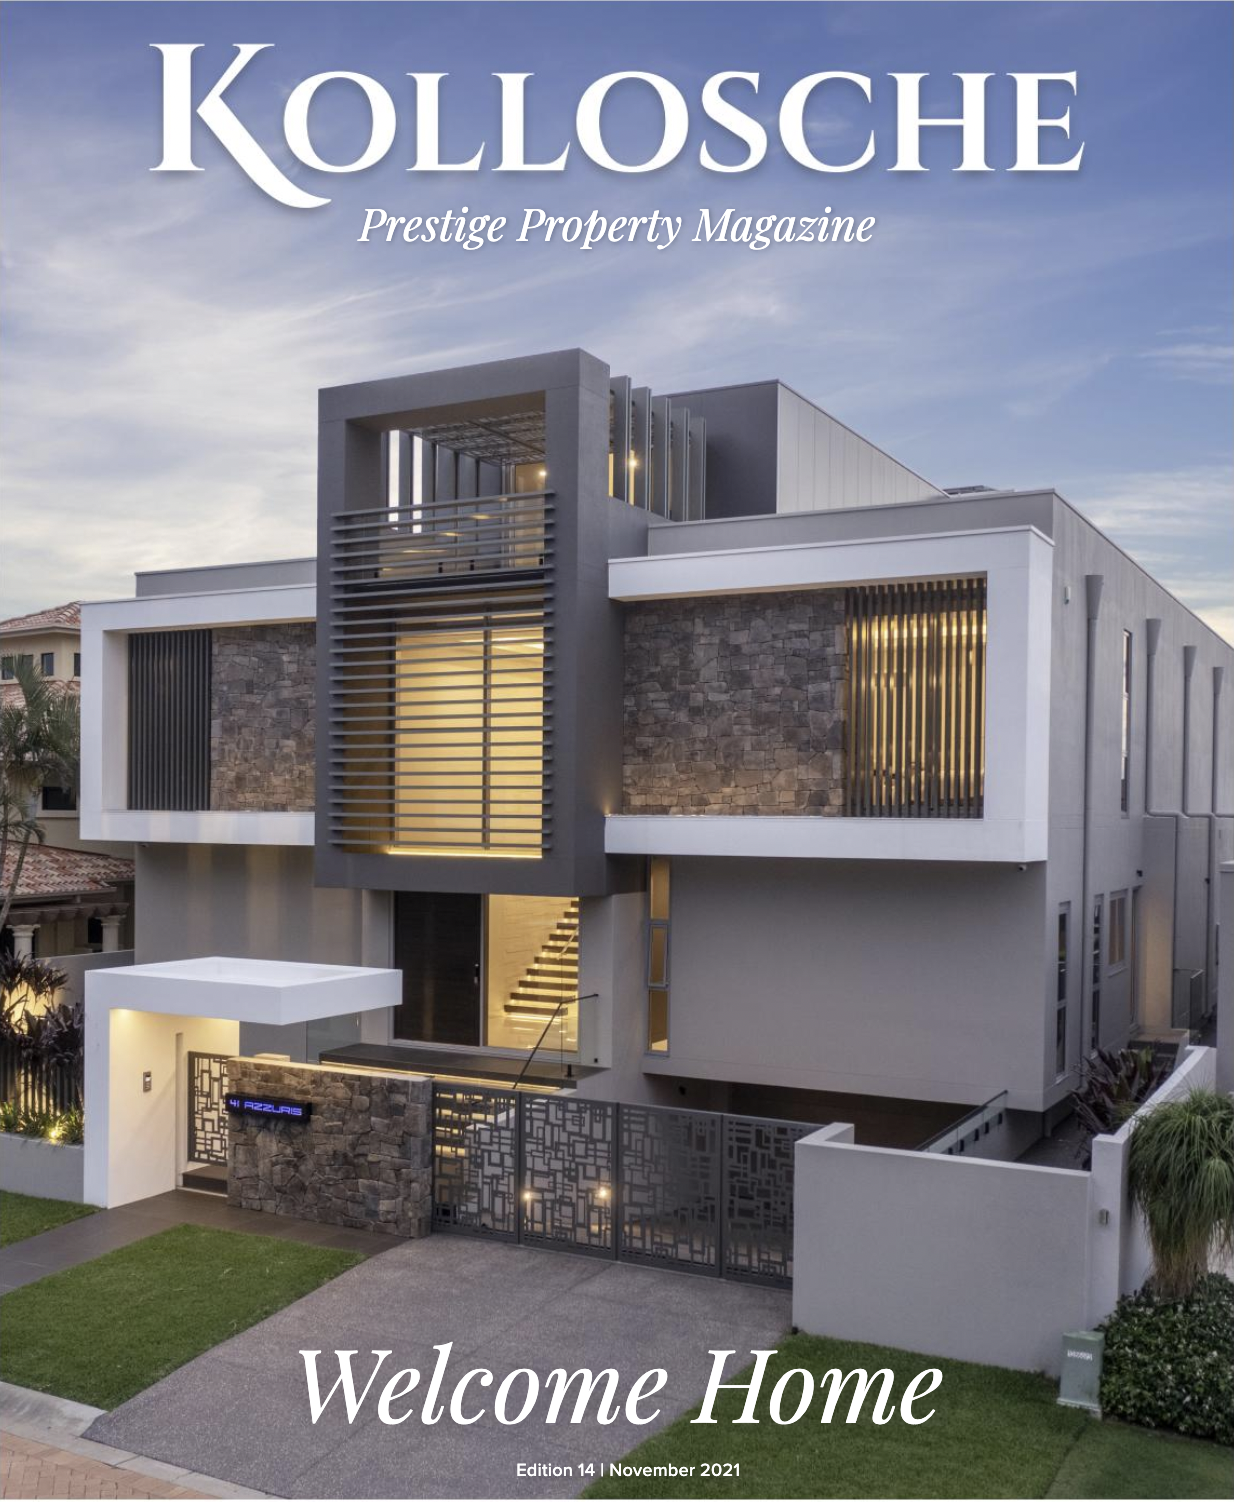 Kollosche Prestige Property Magazine – November 2021, Issue 14